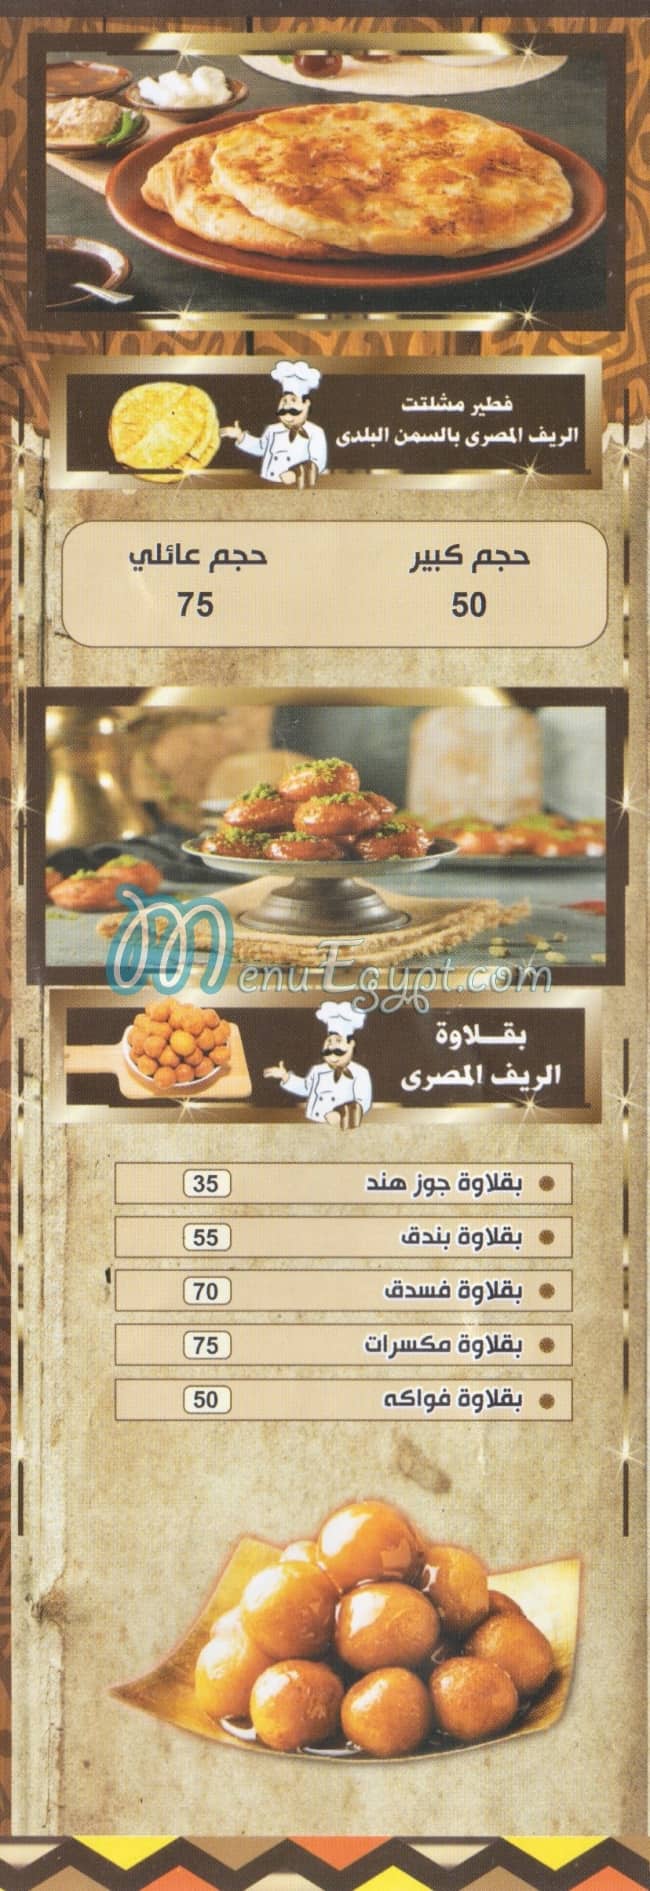 El Ref El Masry menu Egypt 6